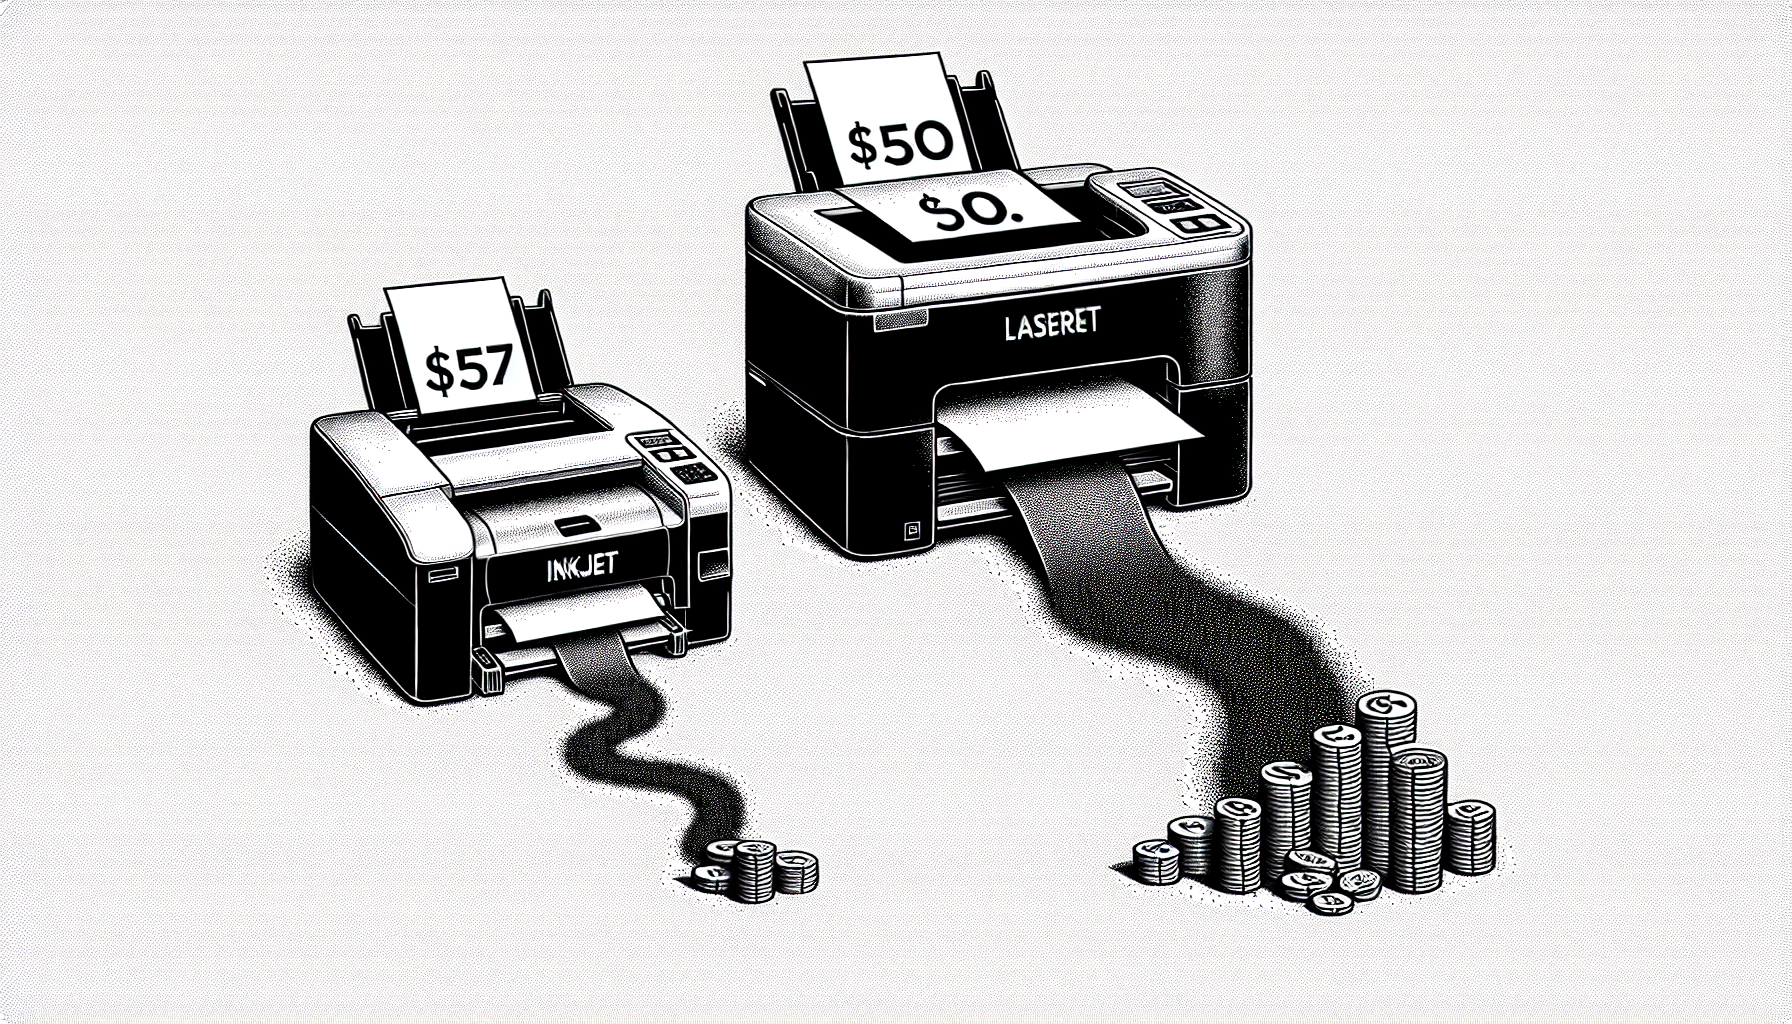 Comparison between initial cost and long-term savings of laserjet printers